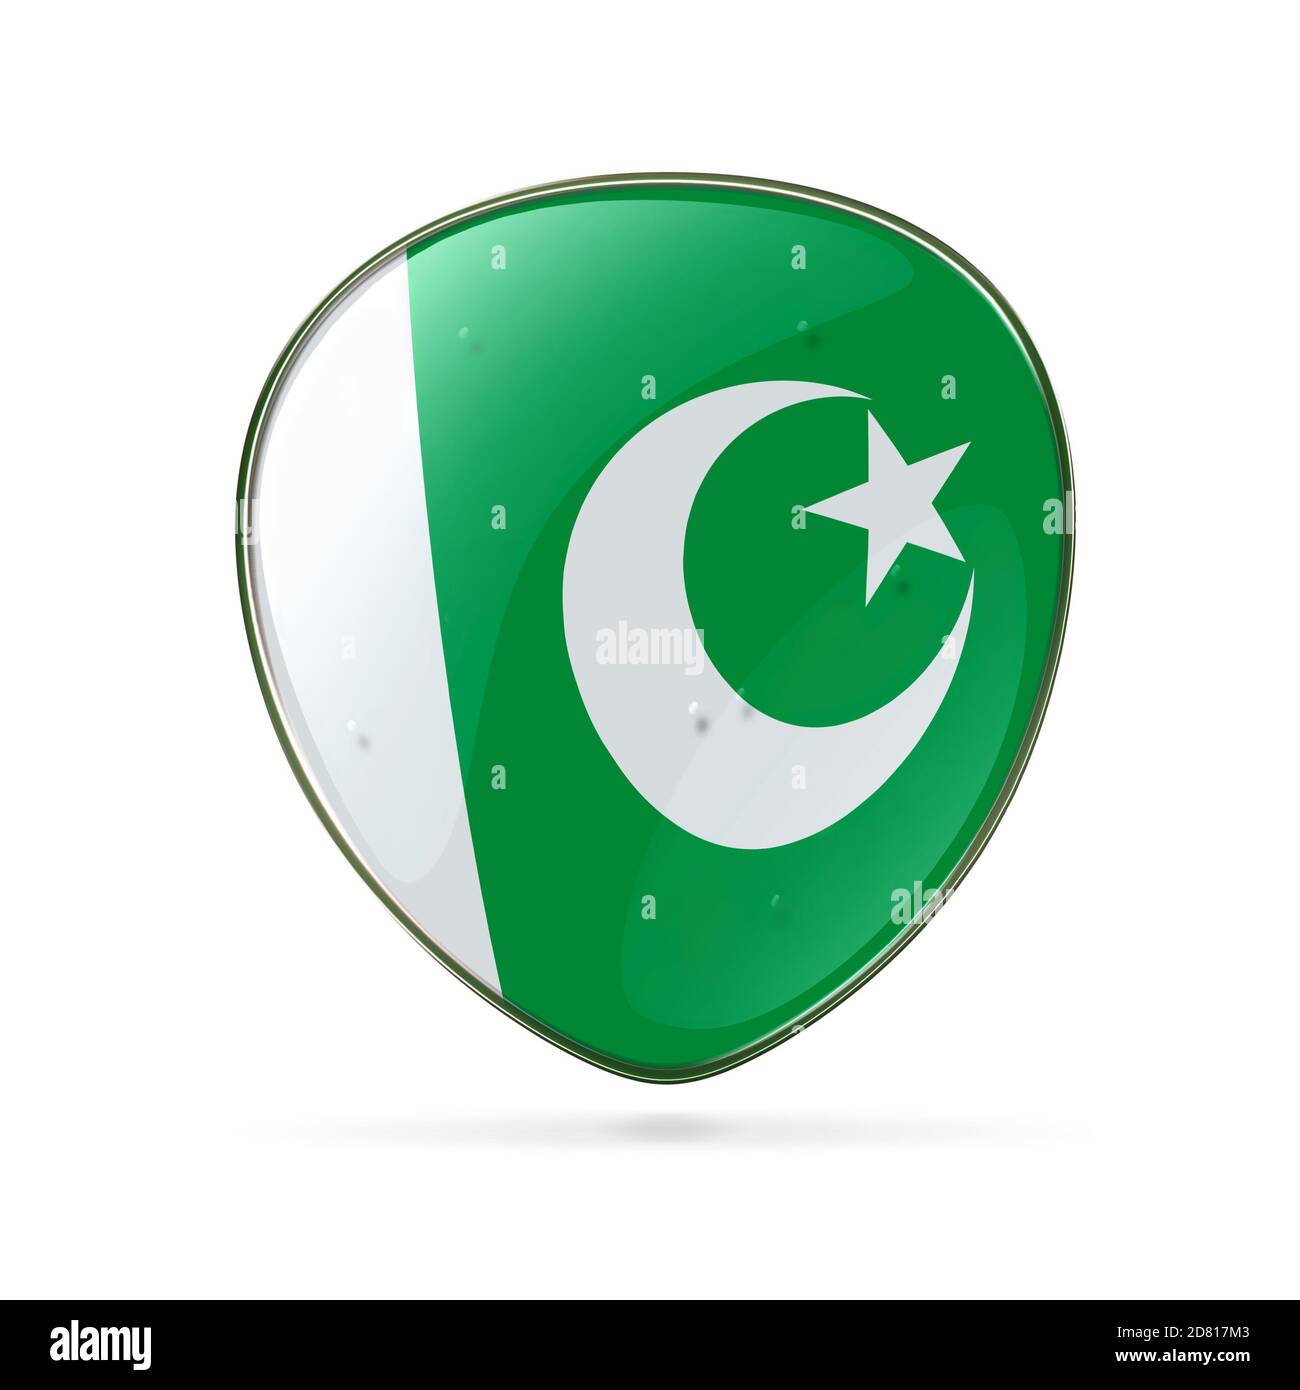 Pakistan Flag Icon, isolated on white background. Stock Photo